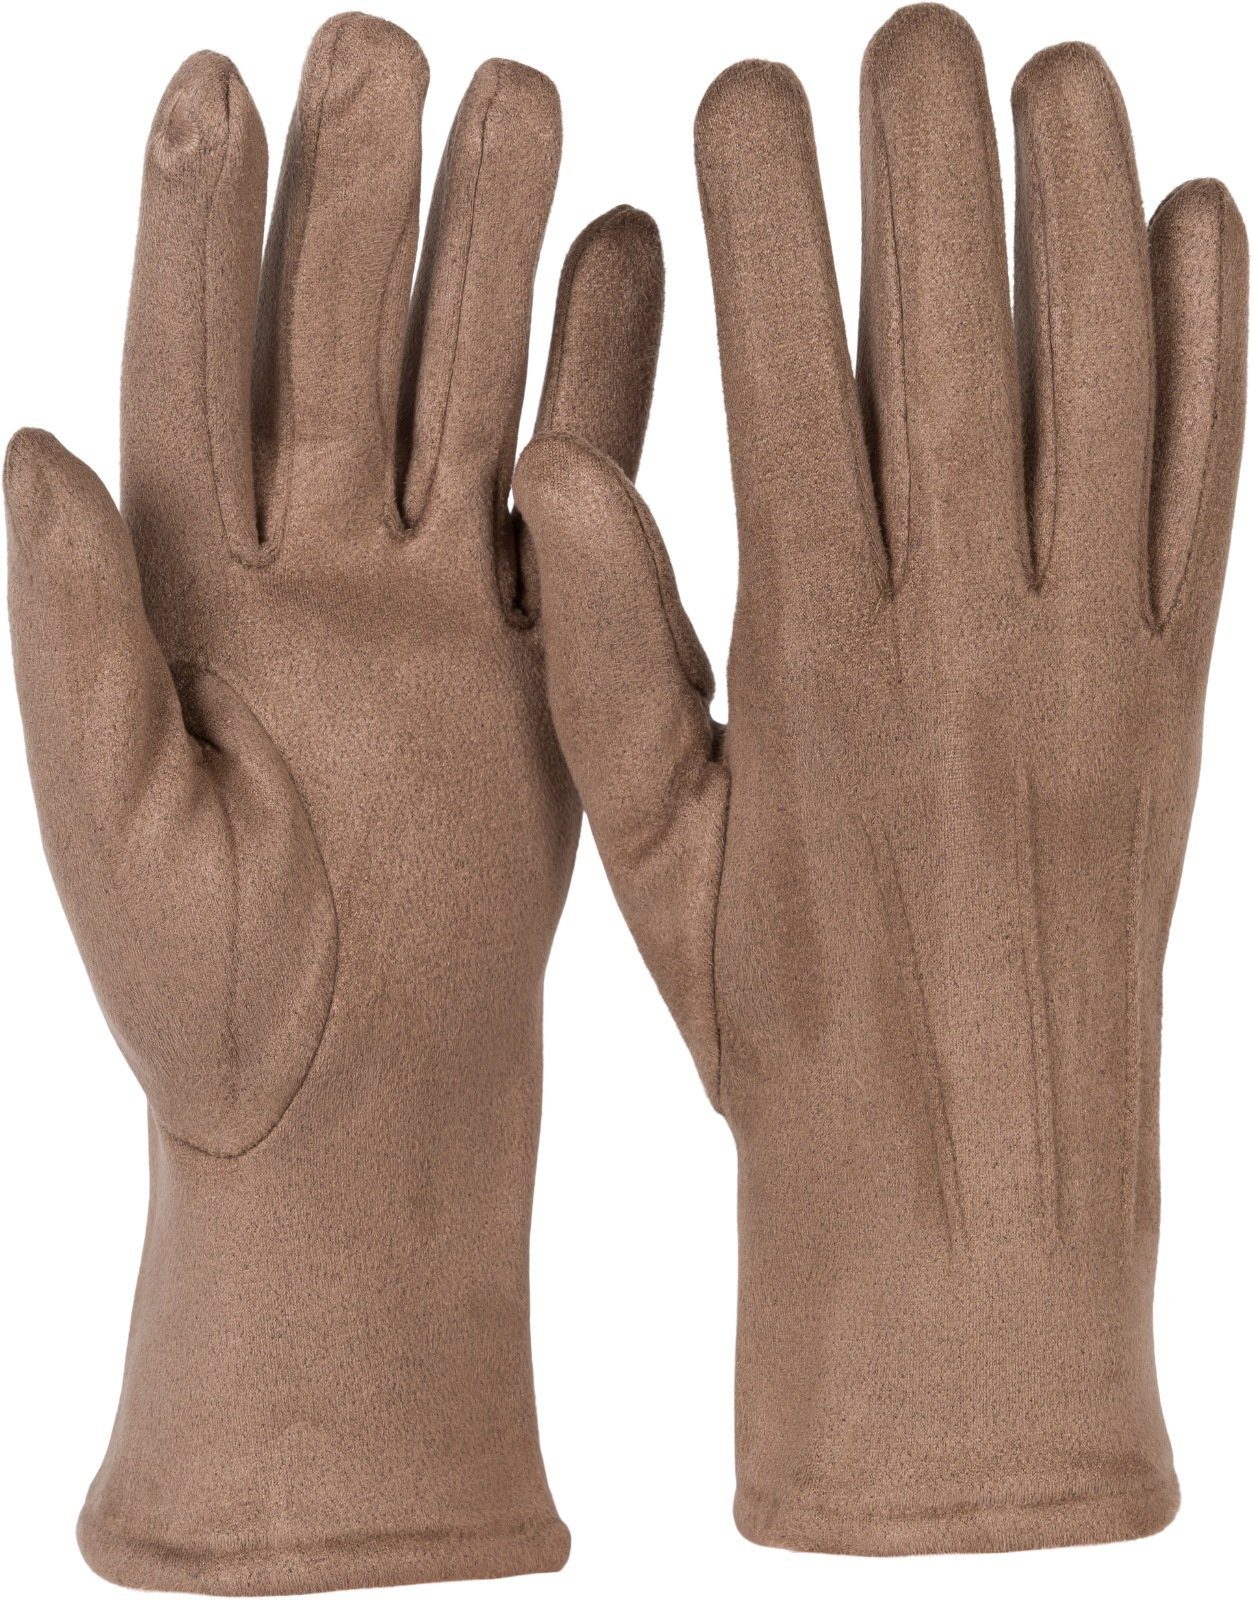 styleBREAKER Fleecehandschuhe Einfarbige Touchscreen Handschuhe Taupe Ziernähte